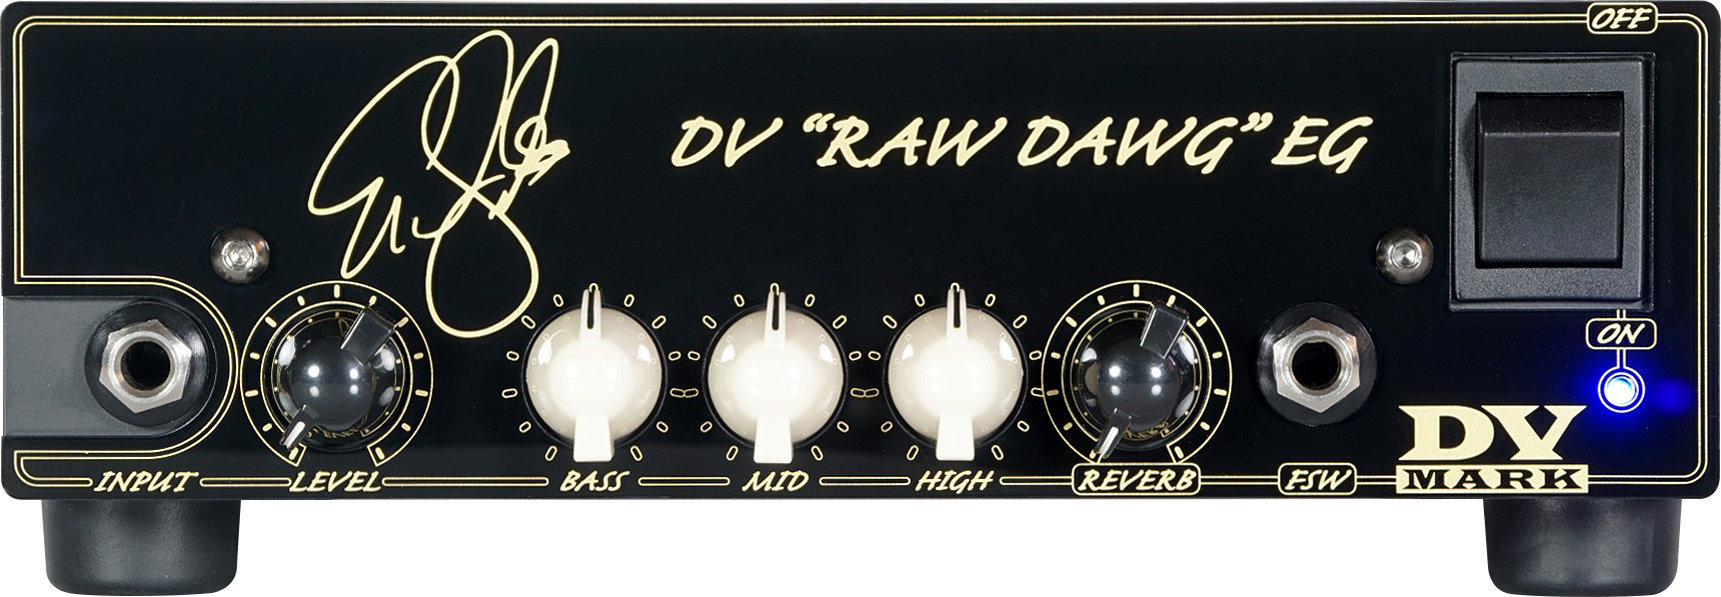 Amplificador híbrido DV Mark DV Raw Dawg EG